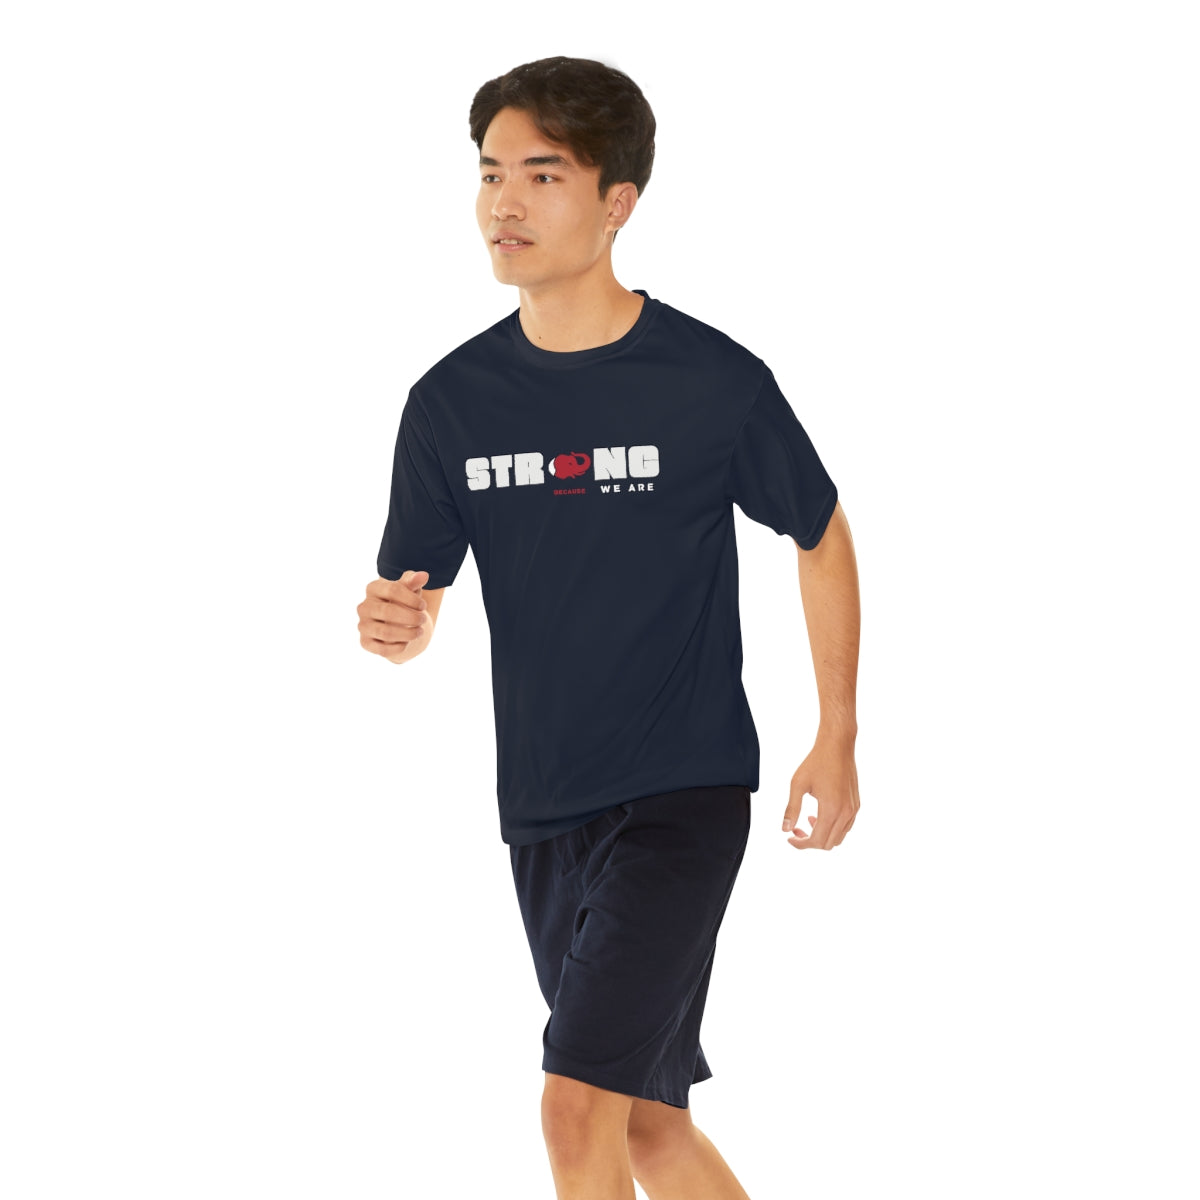 UBUNTU STRONG Men's Performance T-Shirt